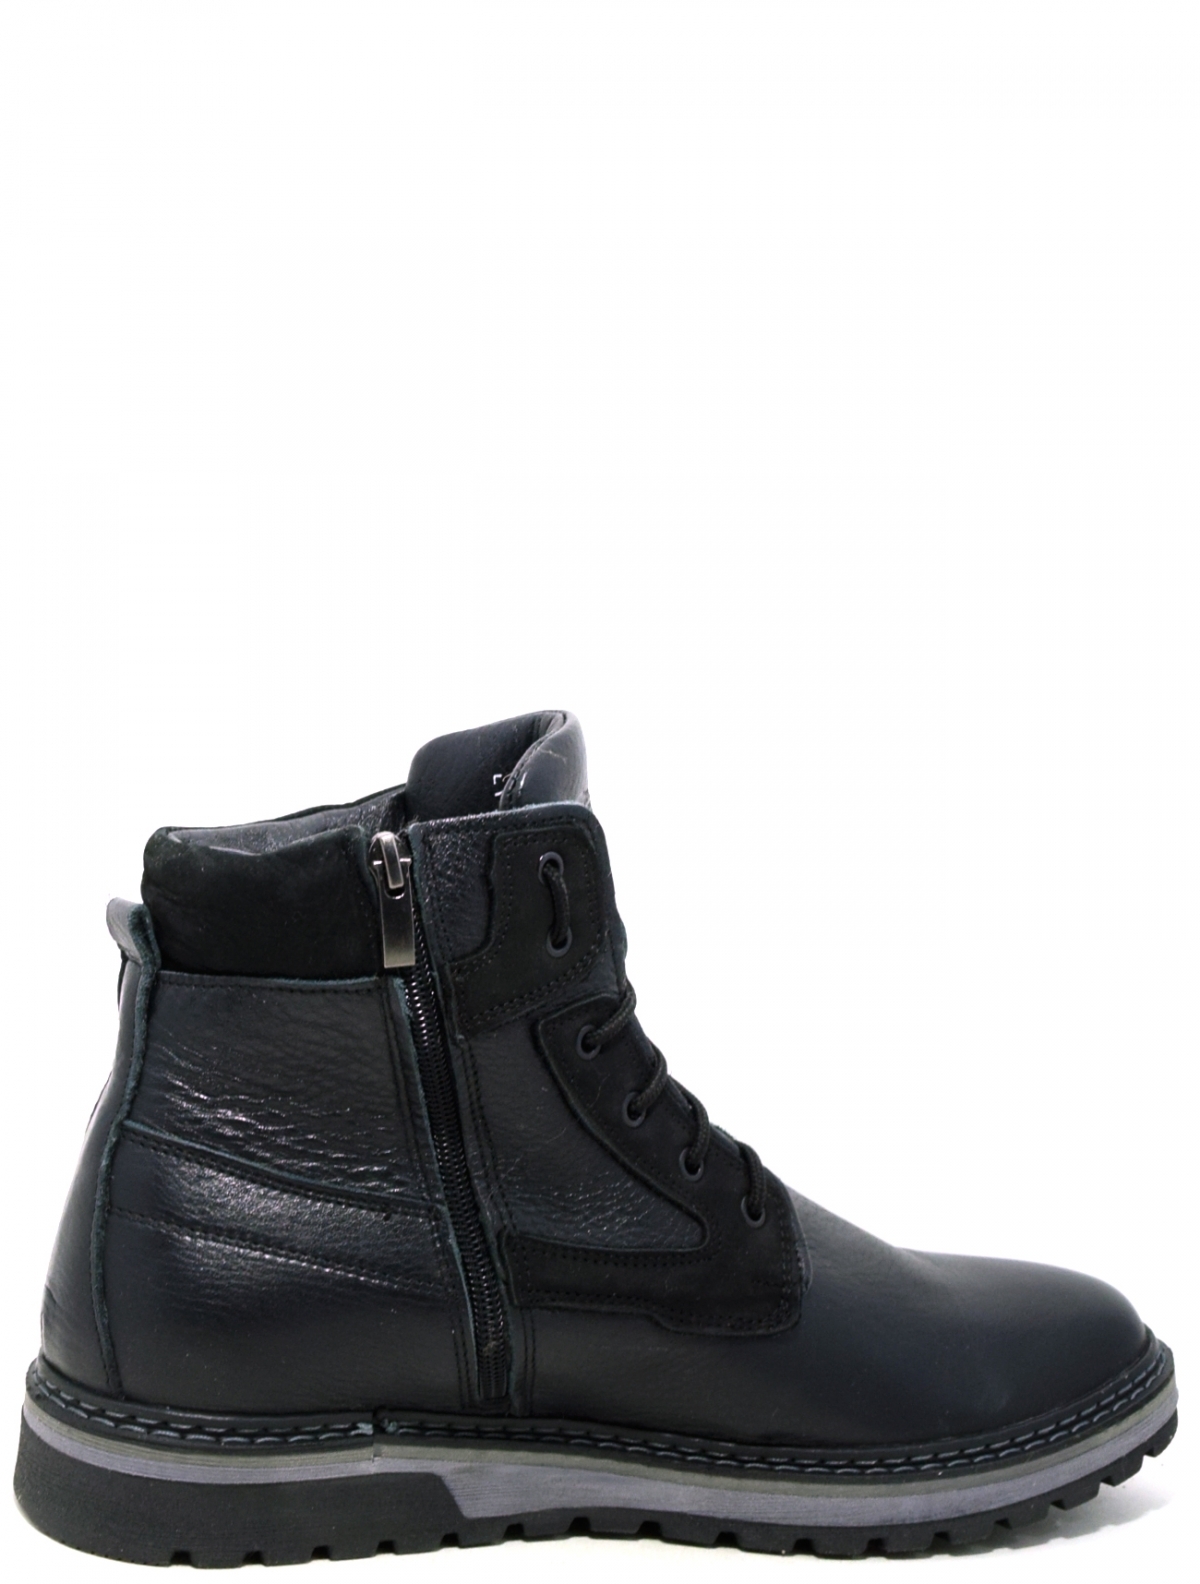 Bossner 5-432-101-3 мужские ботинки